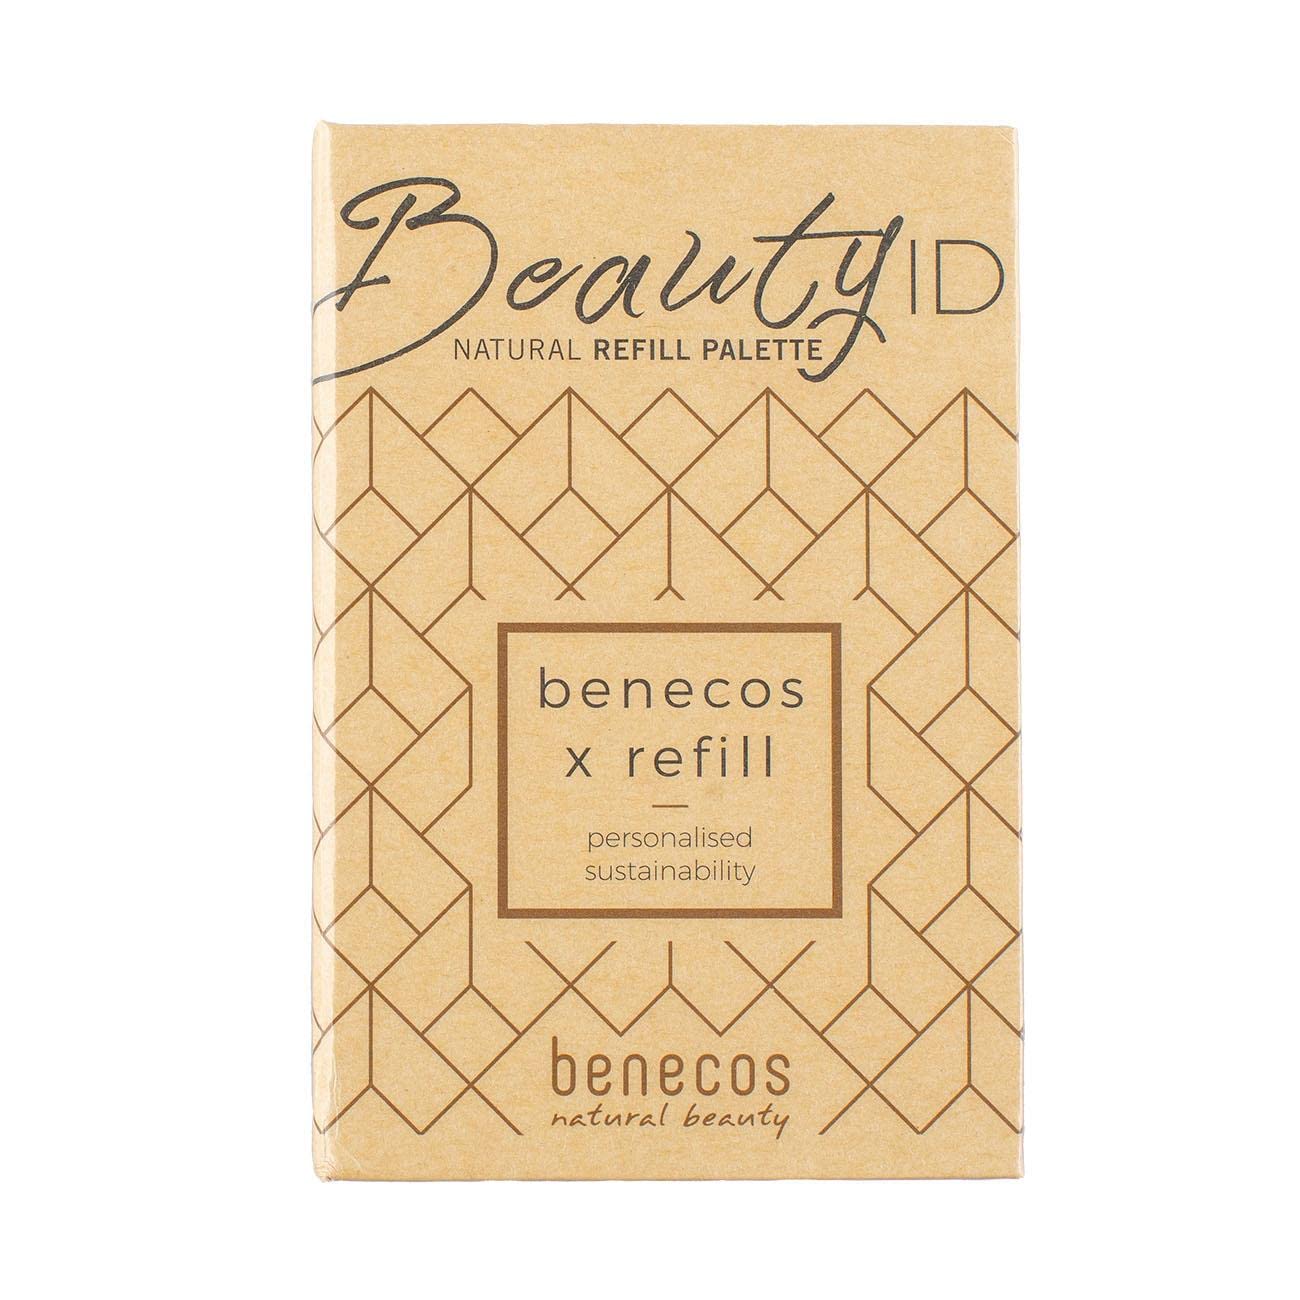 Benecos Organic Cosmetics Beauty ID Refill Palette Small Talc-Free Vegan